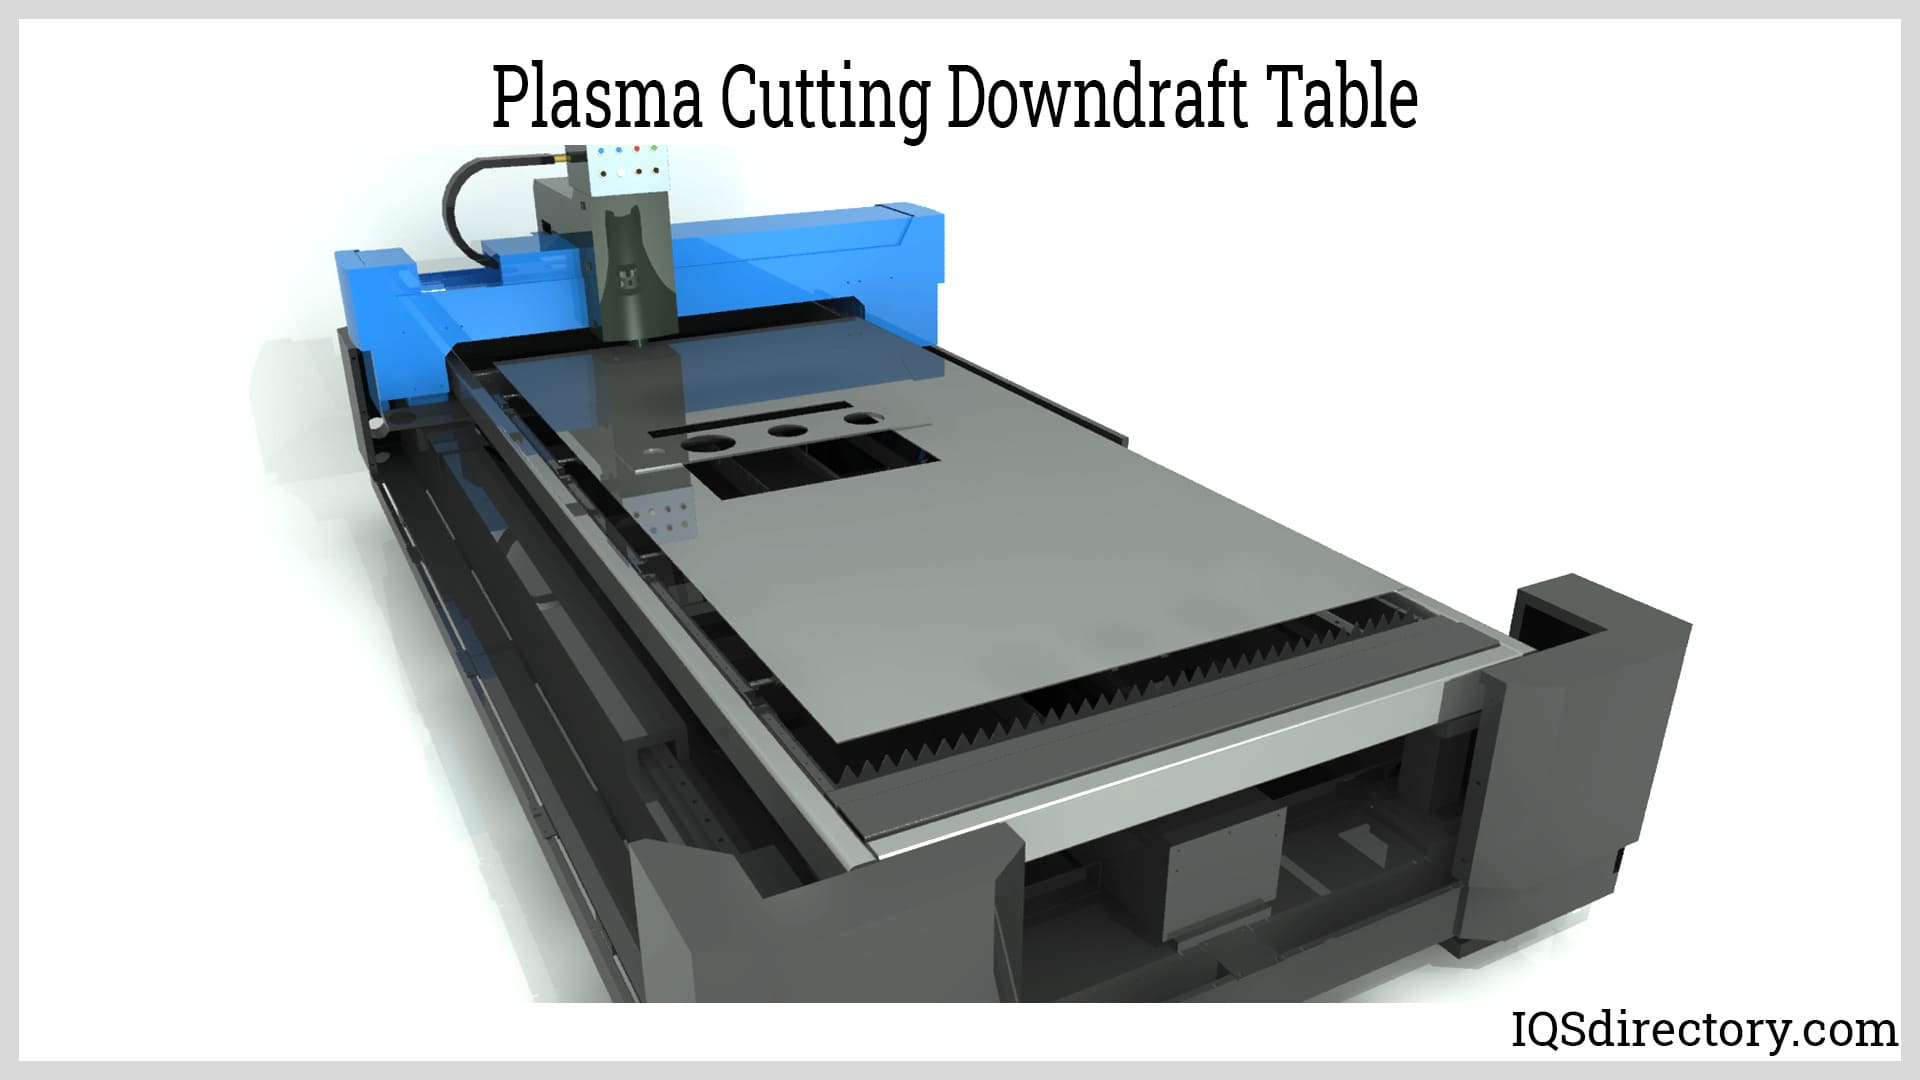 Plasma Cutting Downdraft Table